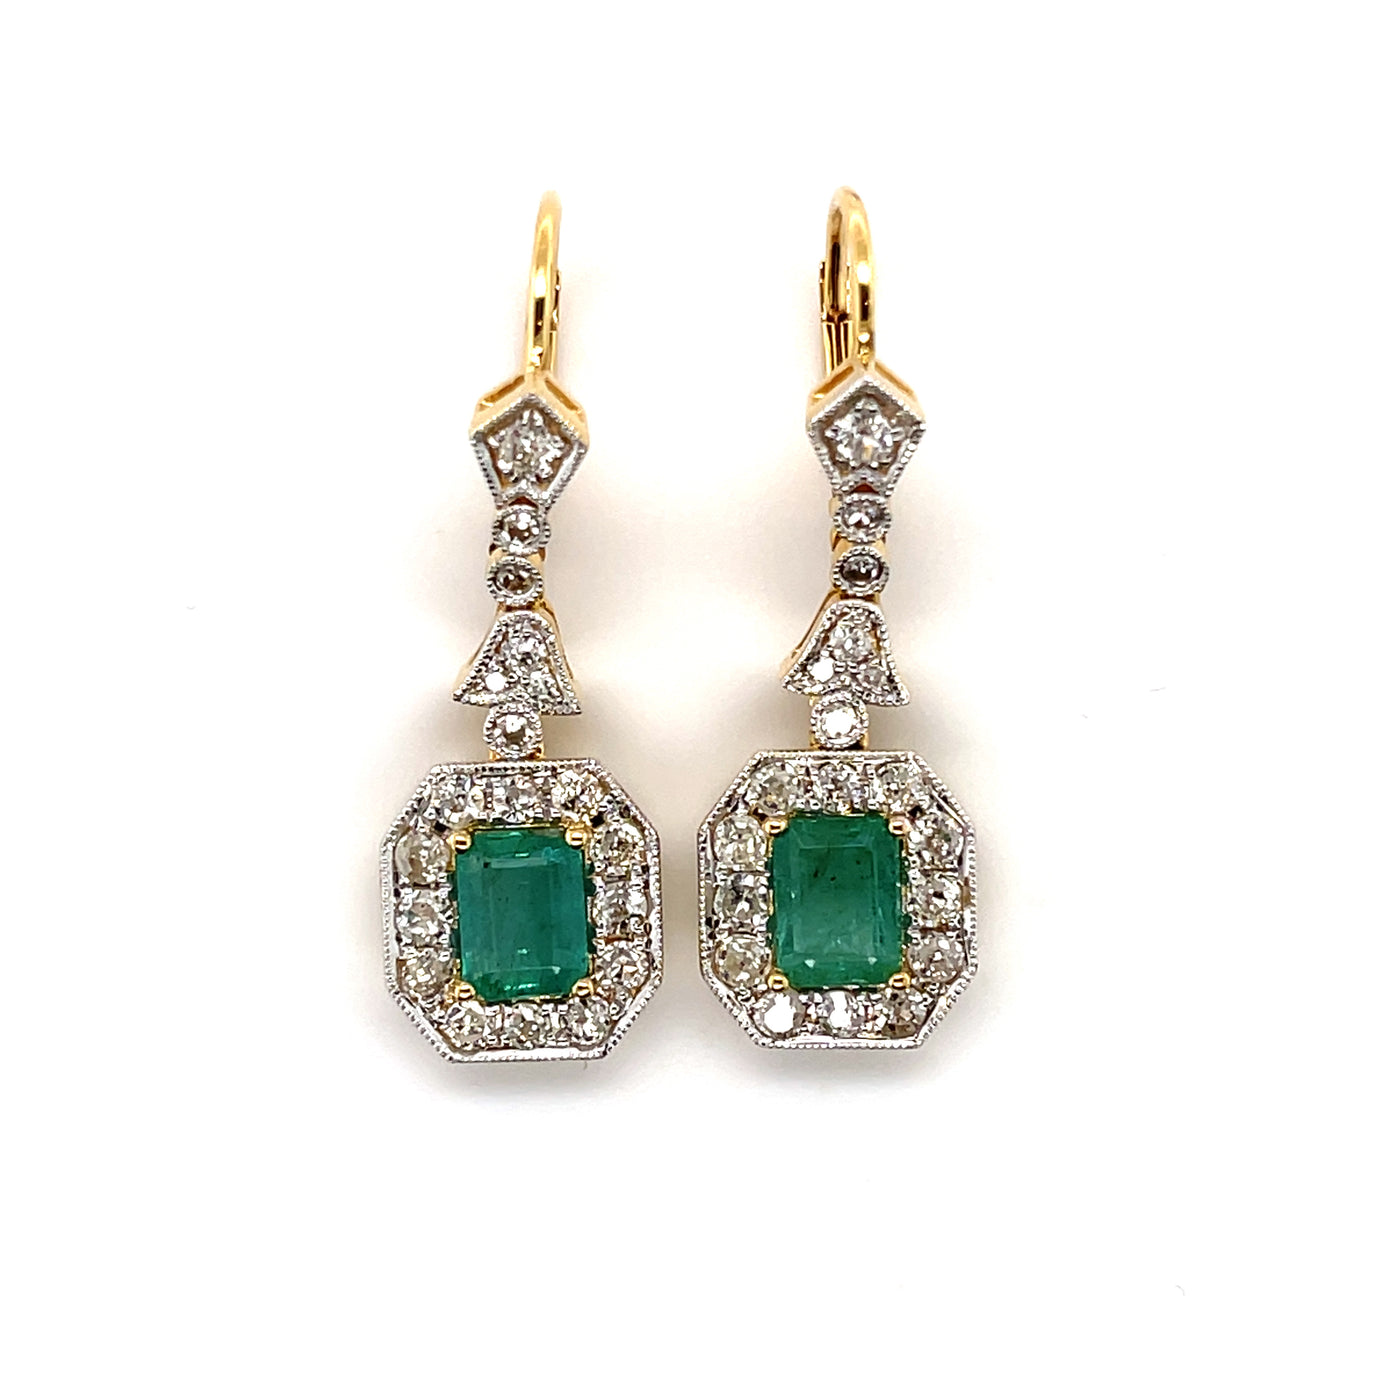 Emerald and Diamond earrings in 18K yellow gold